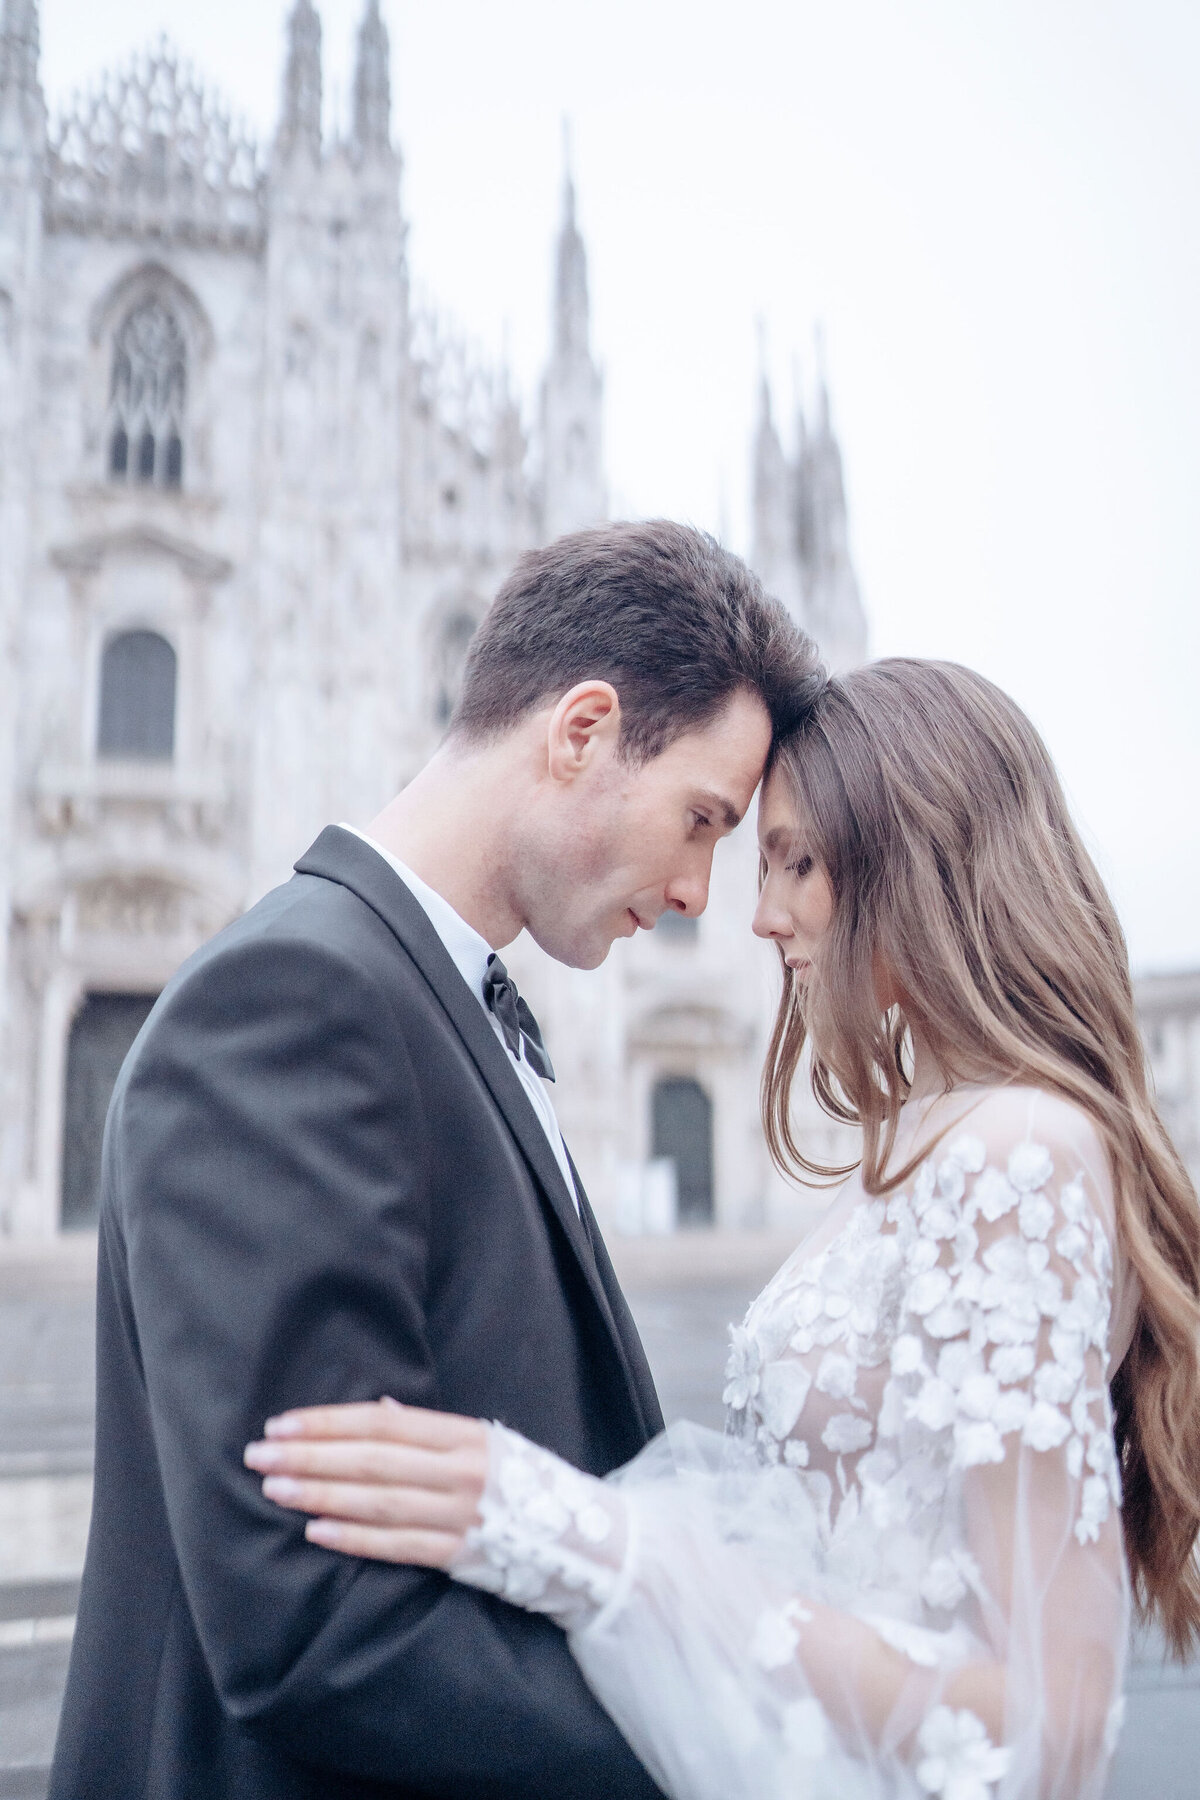 010-Milan-Duomo-Inspiration-Love-Story Elopement-Cinematic-Romance-Destination-Wedding-Editorial-Luxury-Fine-Art-Lisa-Vigliotta-Photography